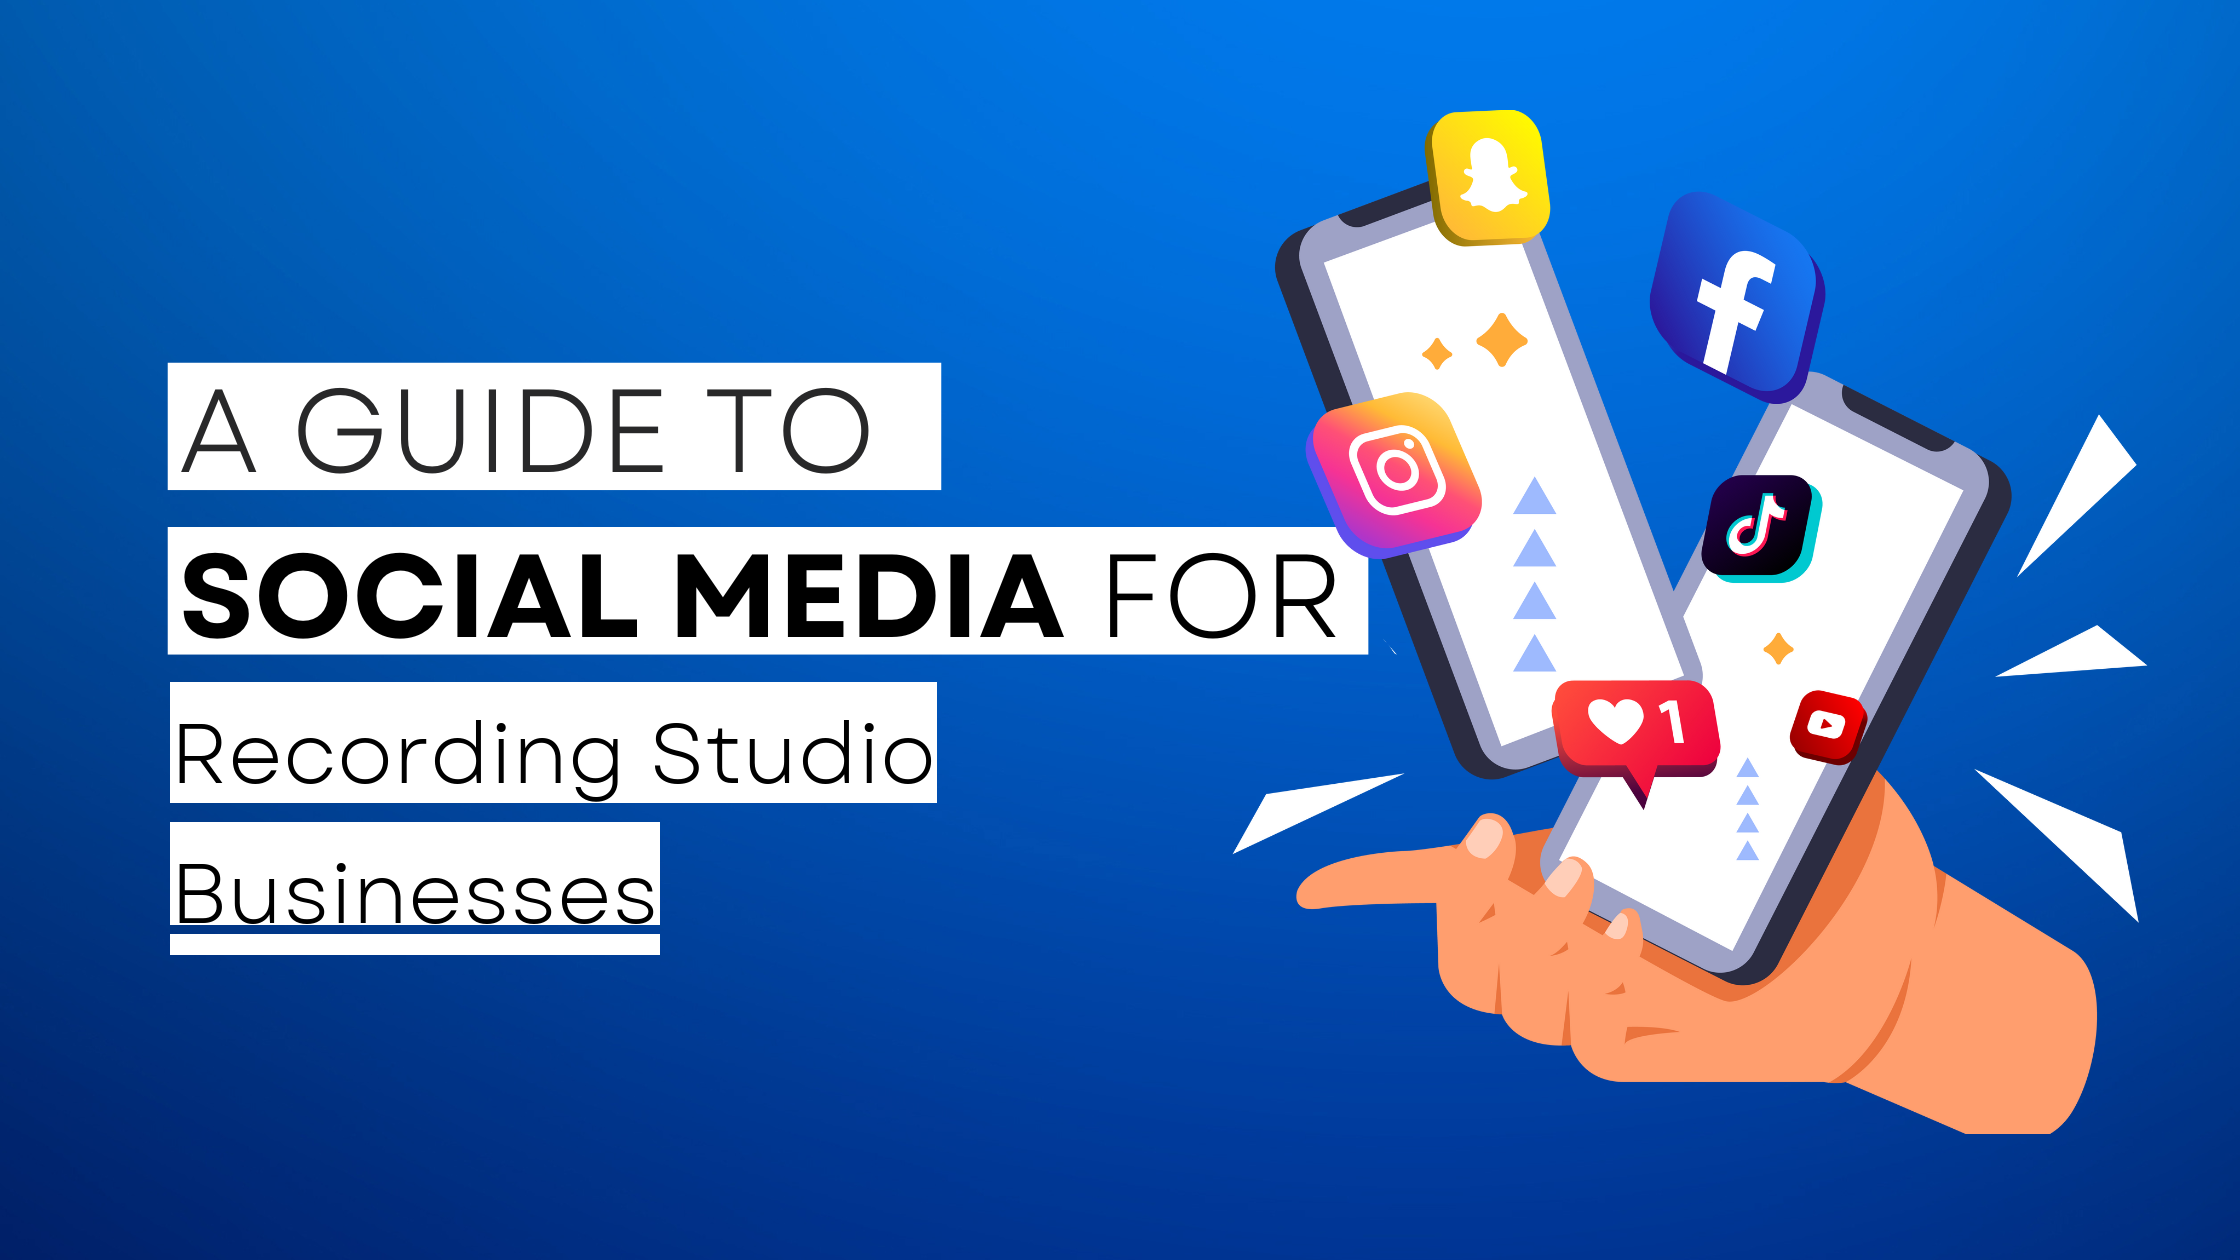 How to start Recording Studio on social media